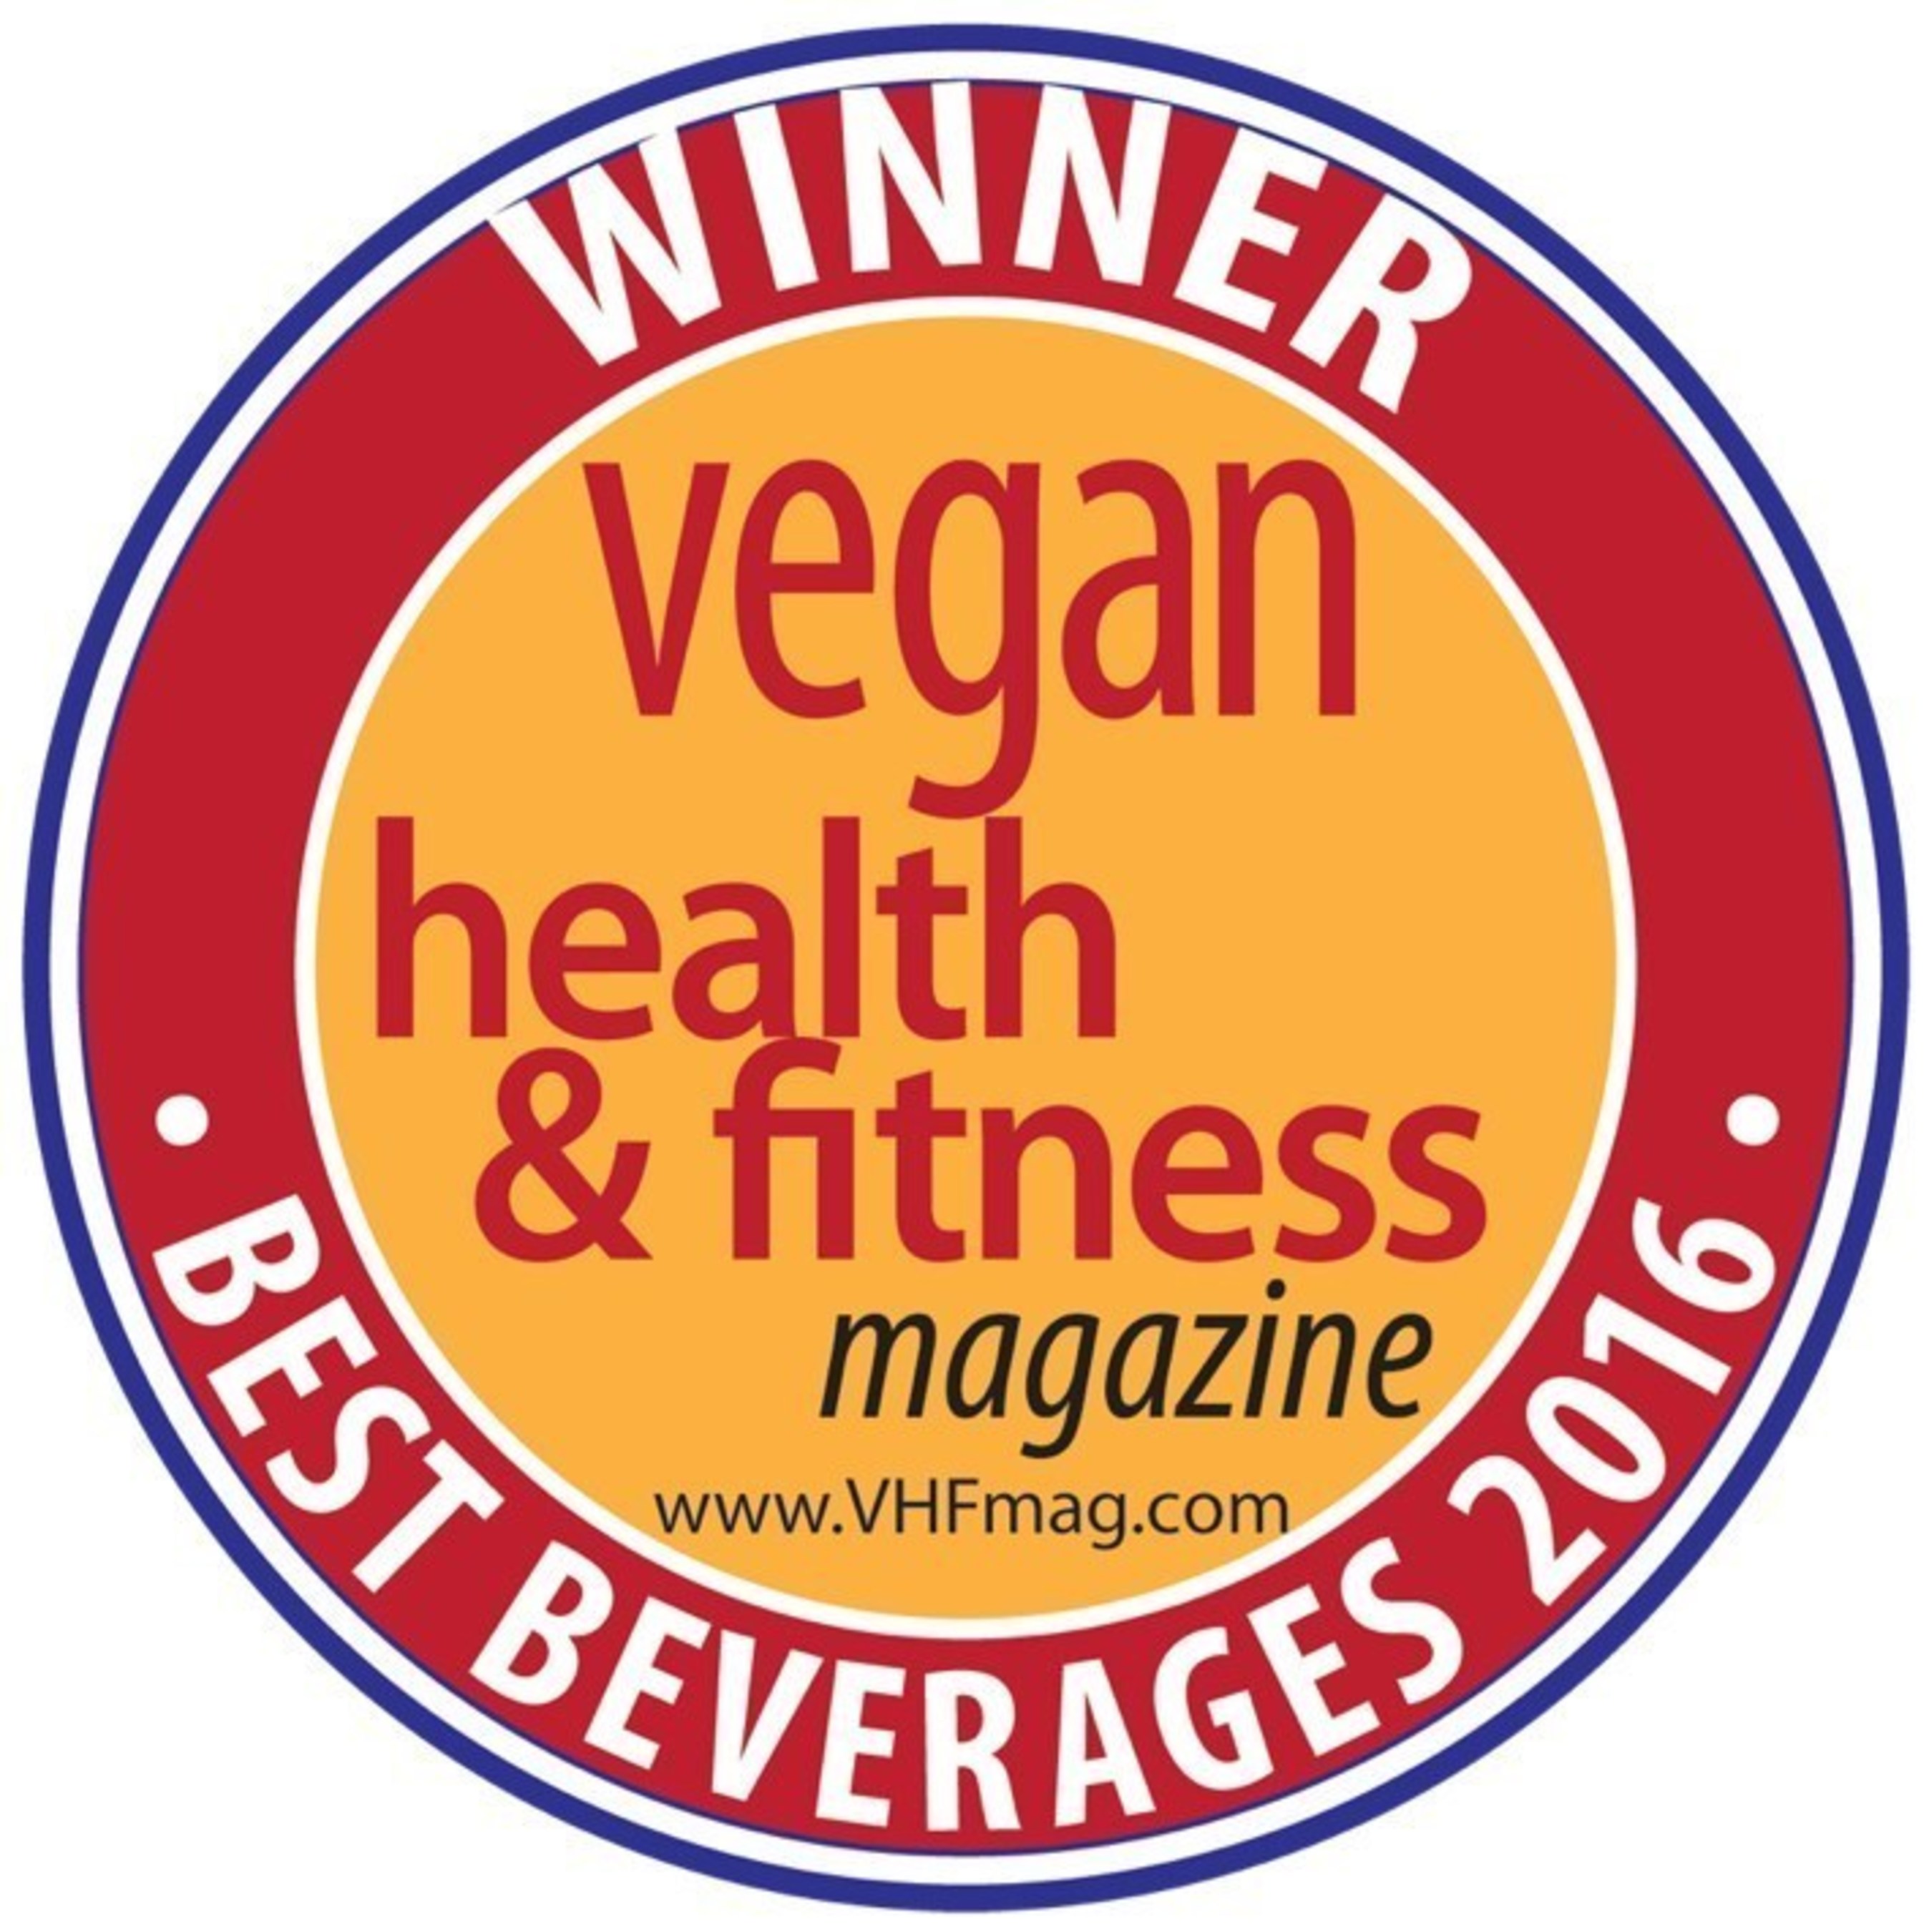 2016 Vegan Health & Fitness Best Beverages Winner